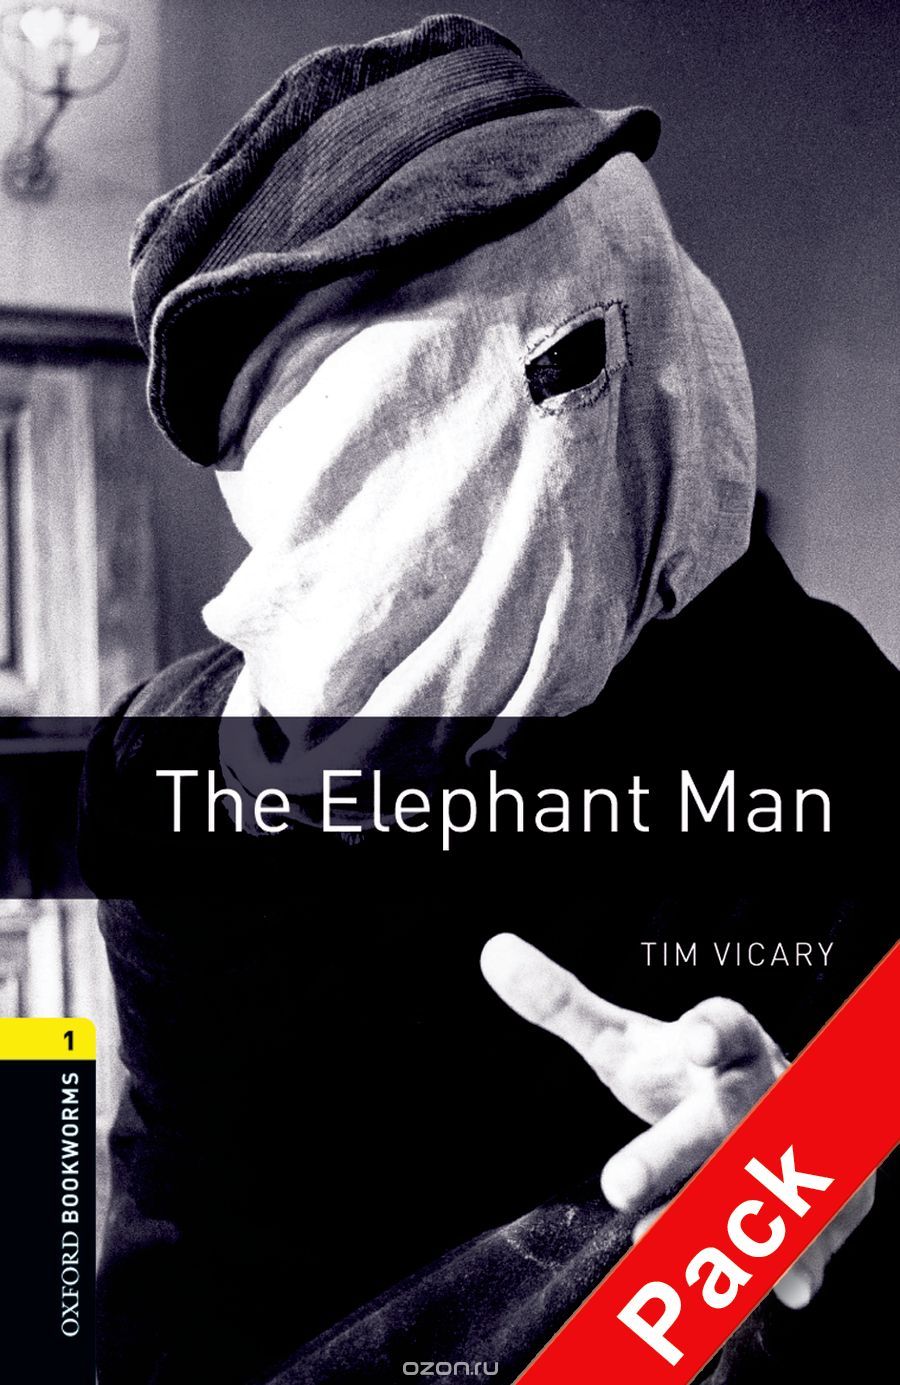 Скачать книгу "OXFORD bookworms library 1: ELEPHANT MAN PACK 3E"